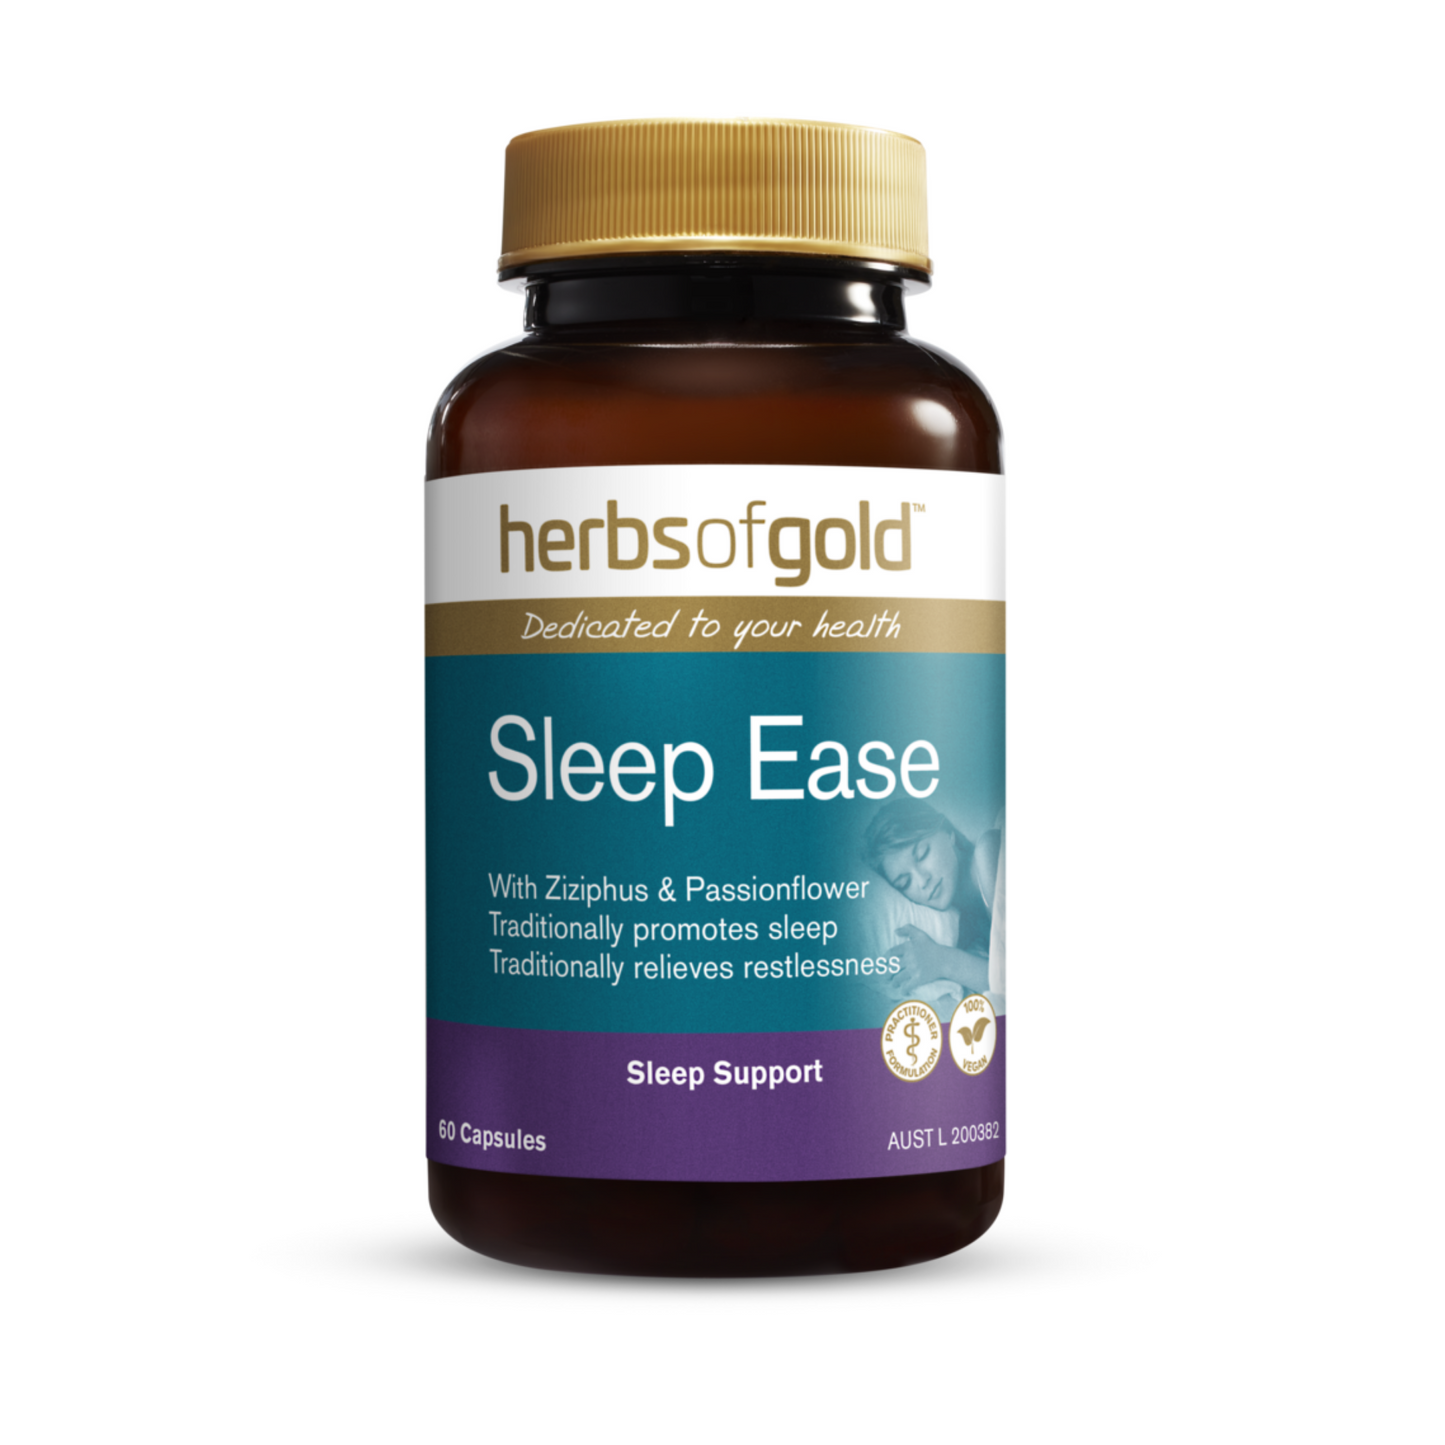 Herbs of Gold Sleep Ease 30 Capsules